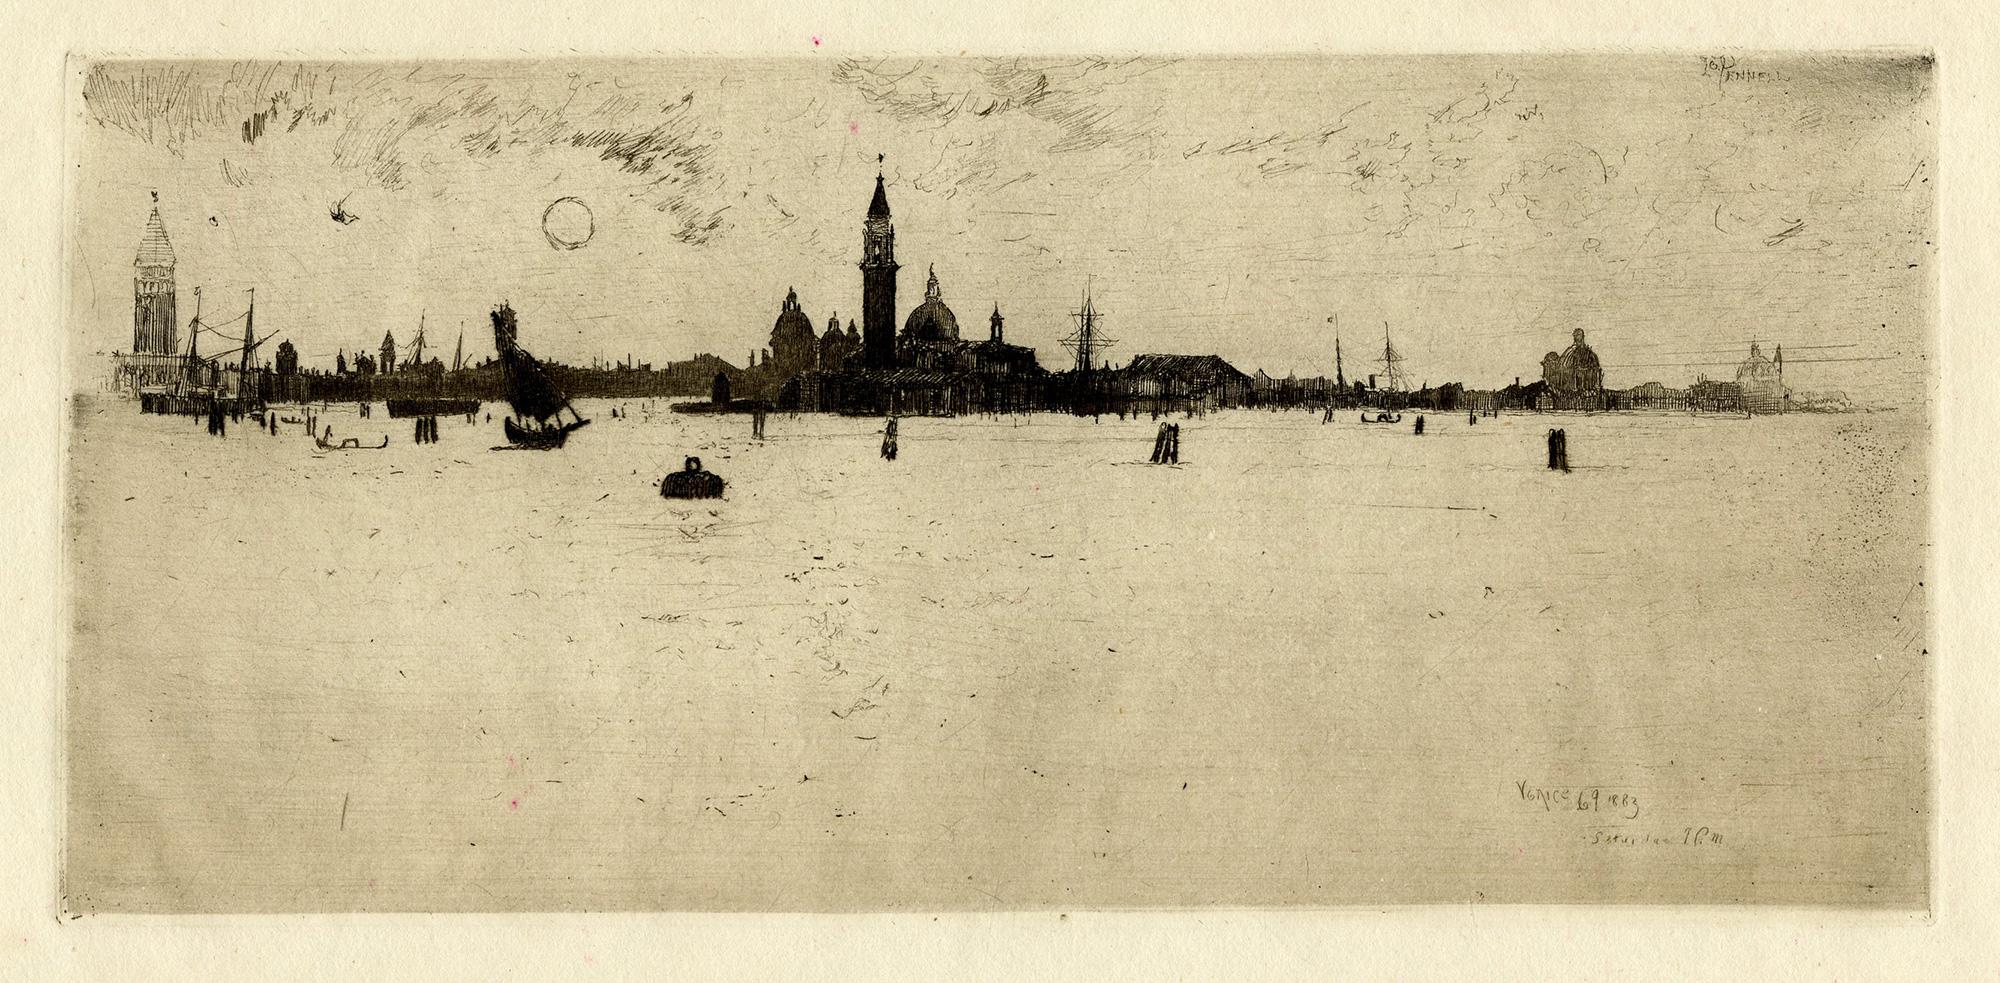 Joseph Pennell Landscape Print - Venice from the Sea